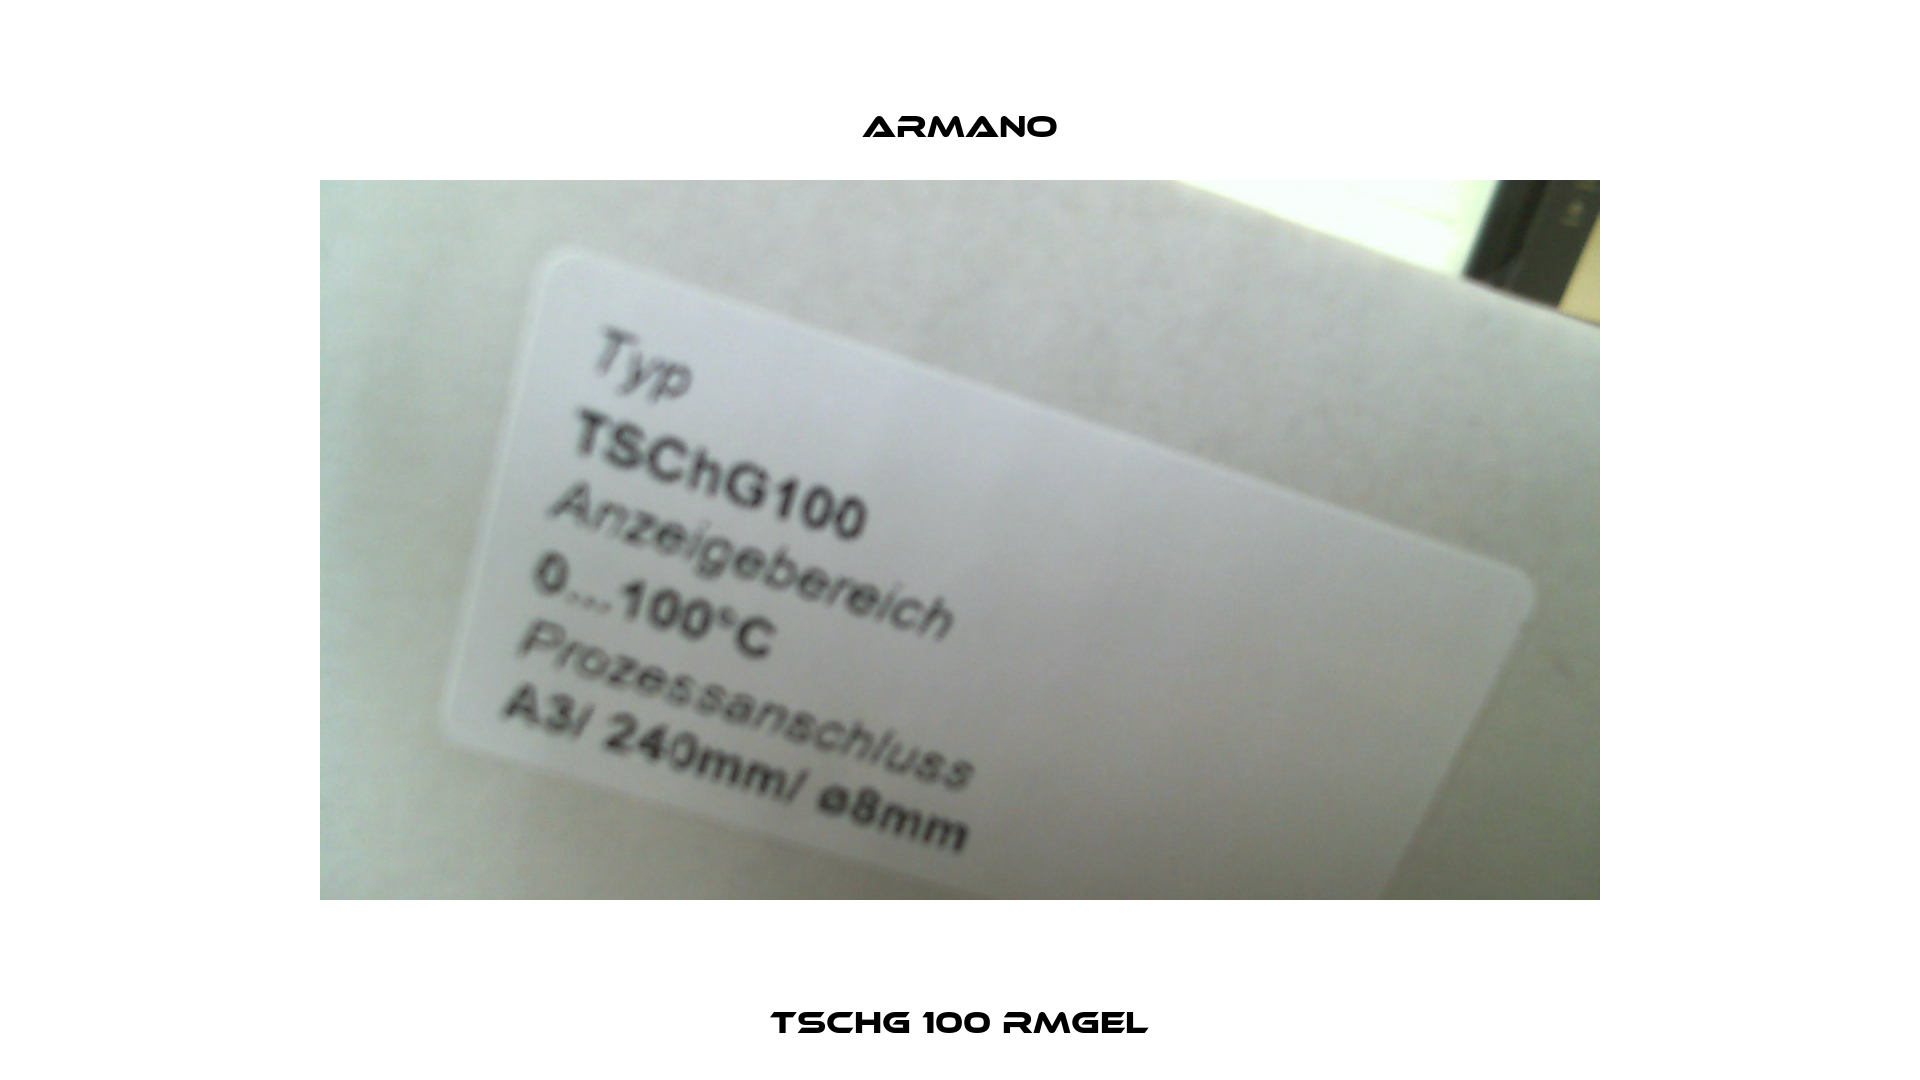 TSCHG 100 RMGEL ARMANO